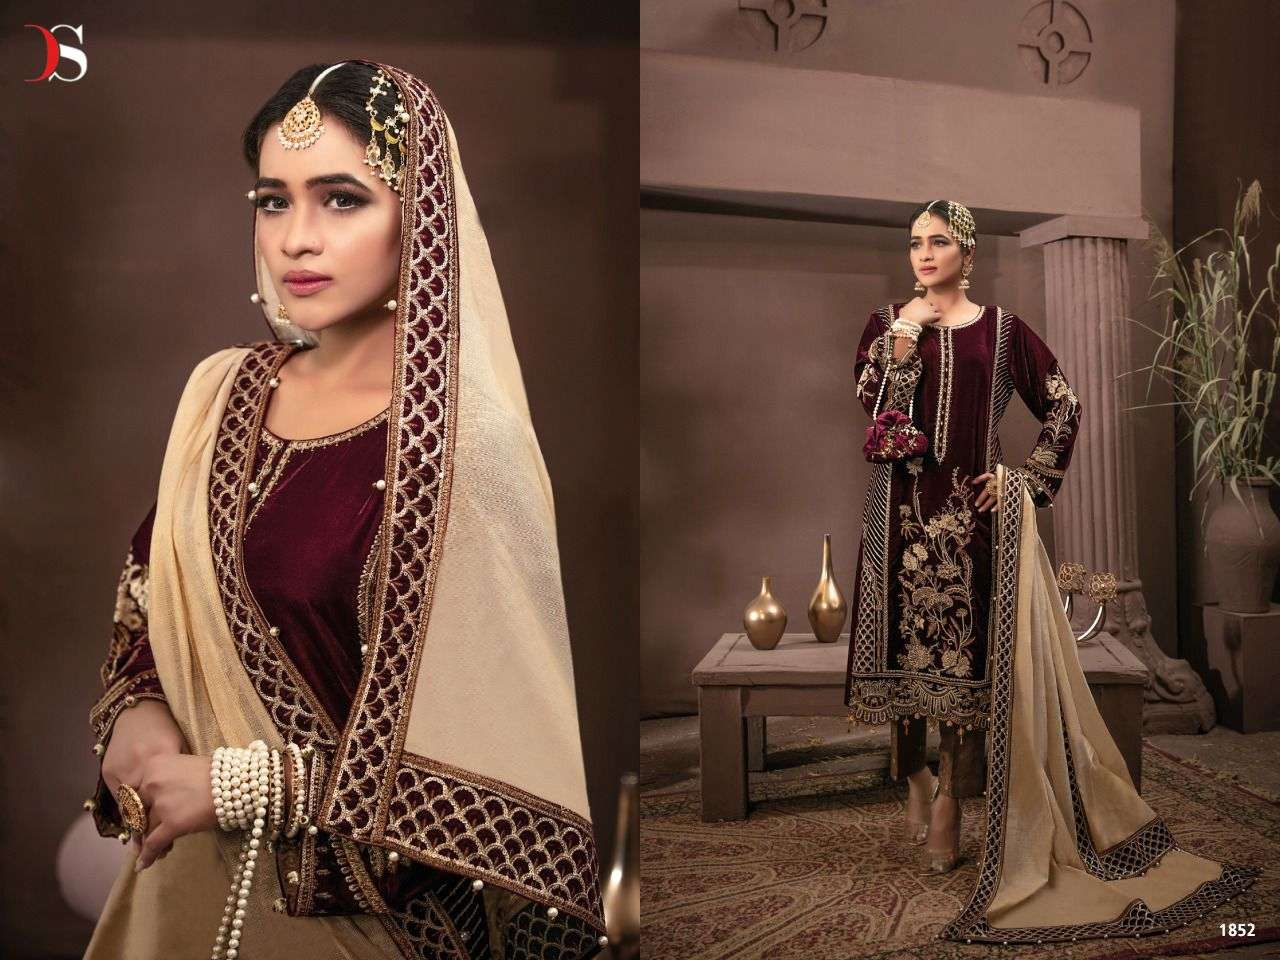 Deepsy Rangrasiya Velvet Collection Nx Catalog Pakistani Salwar Suits Wholesale